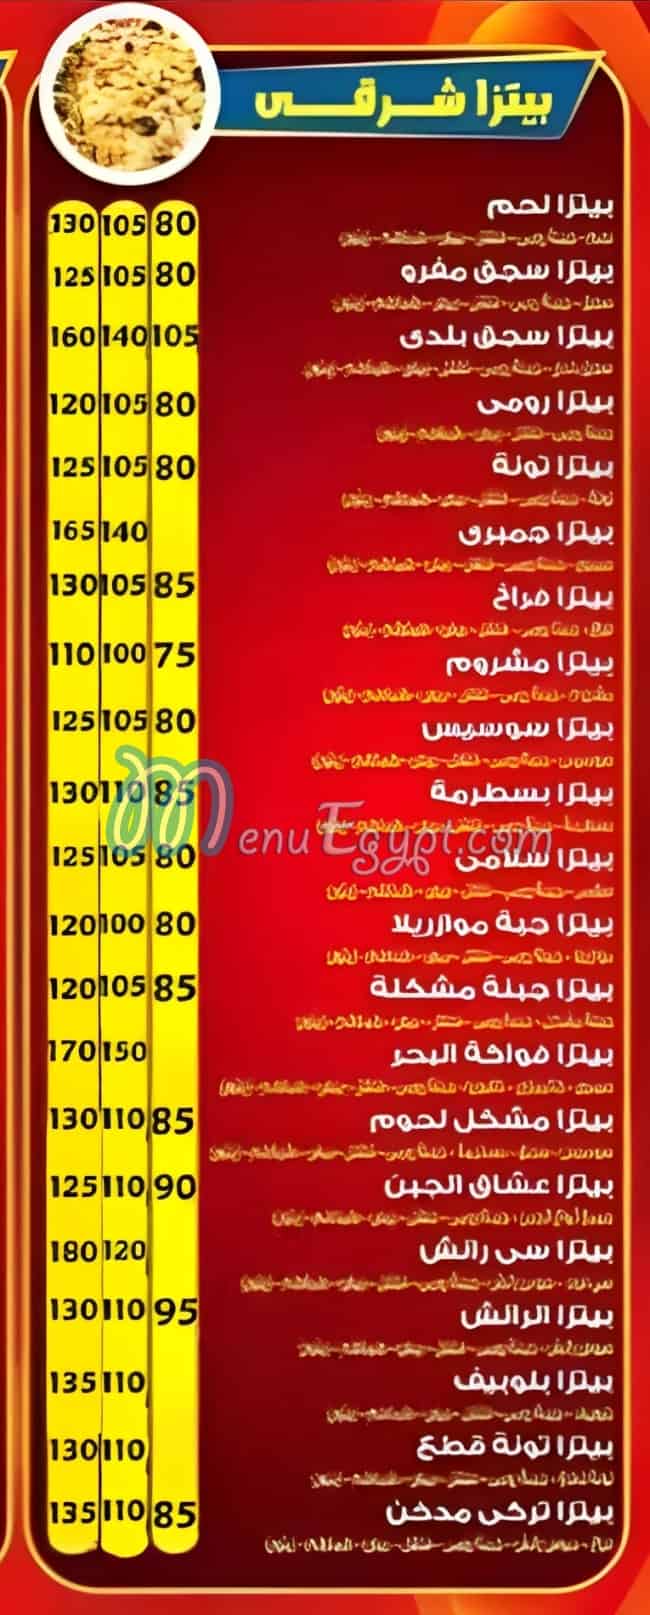 Fatatry Wael menu Egypt 2